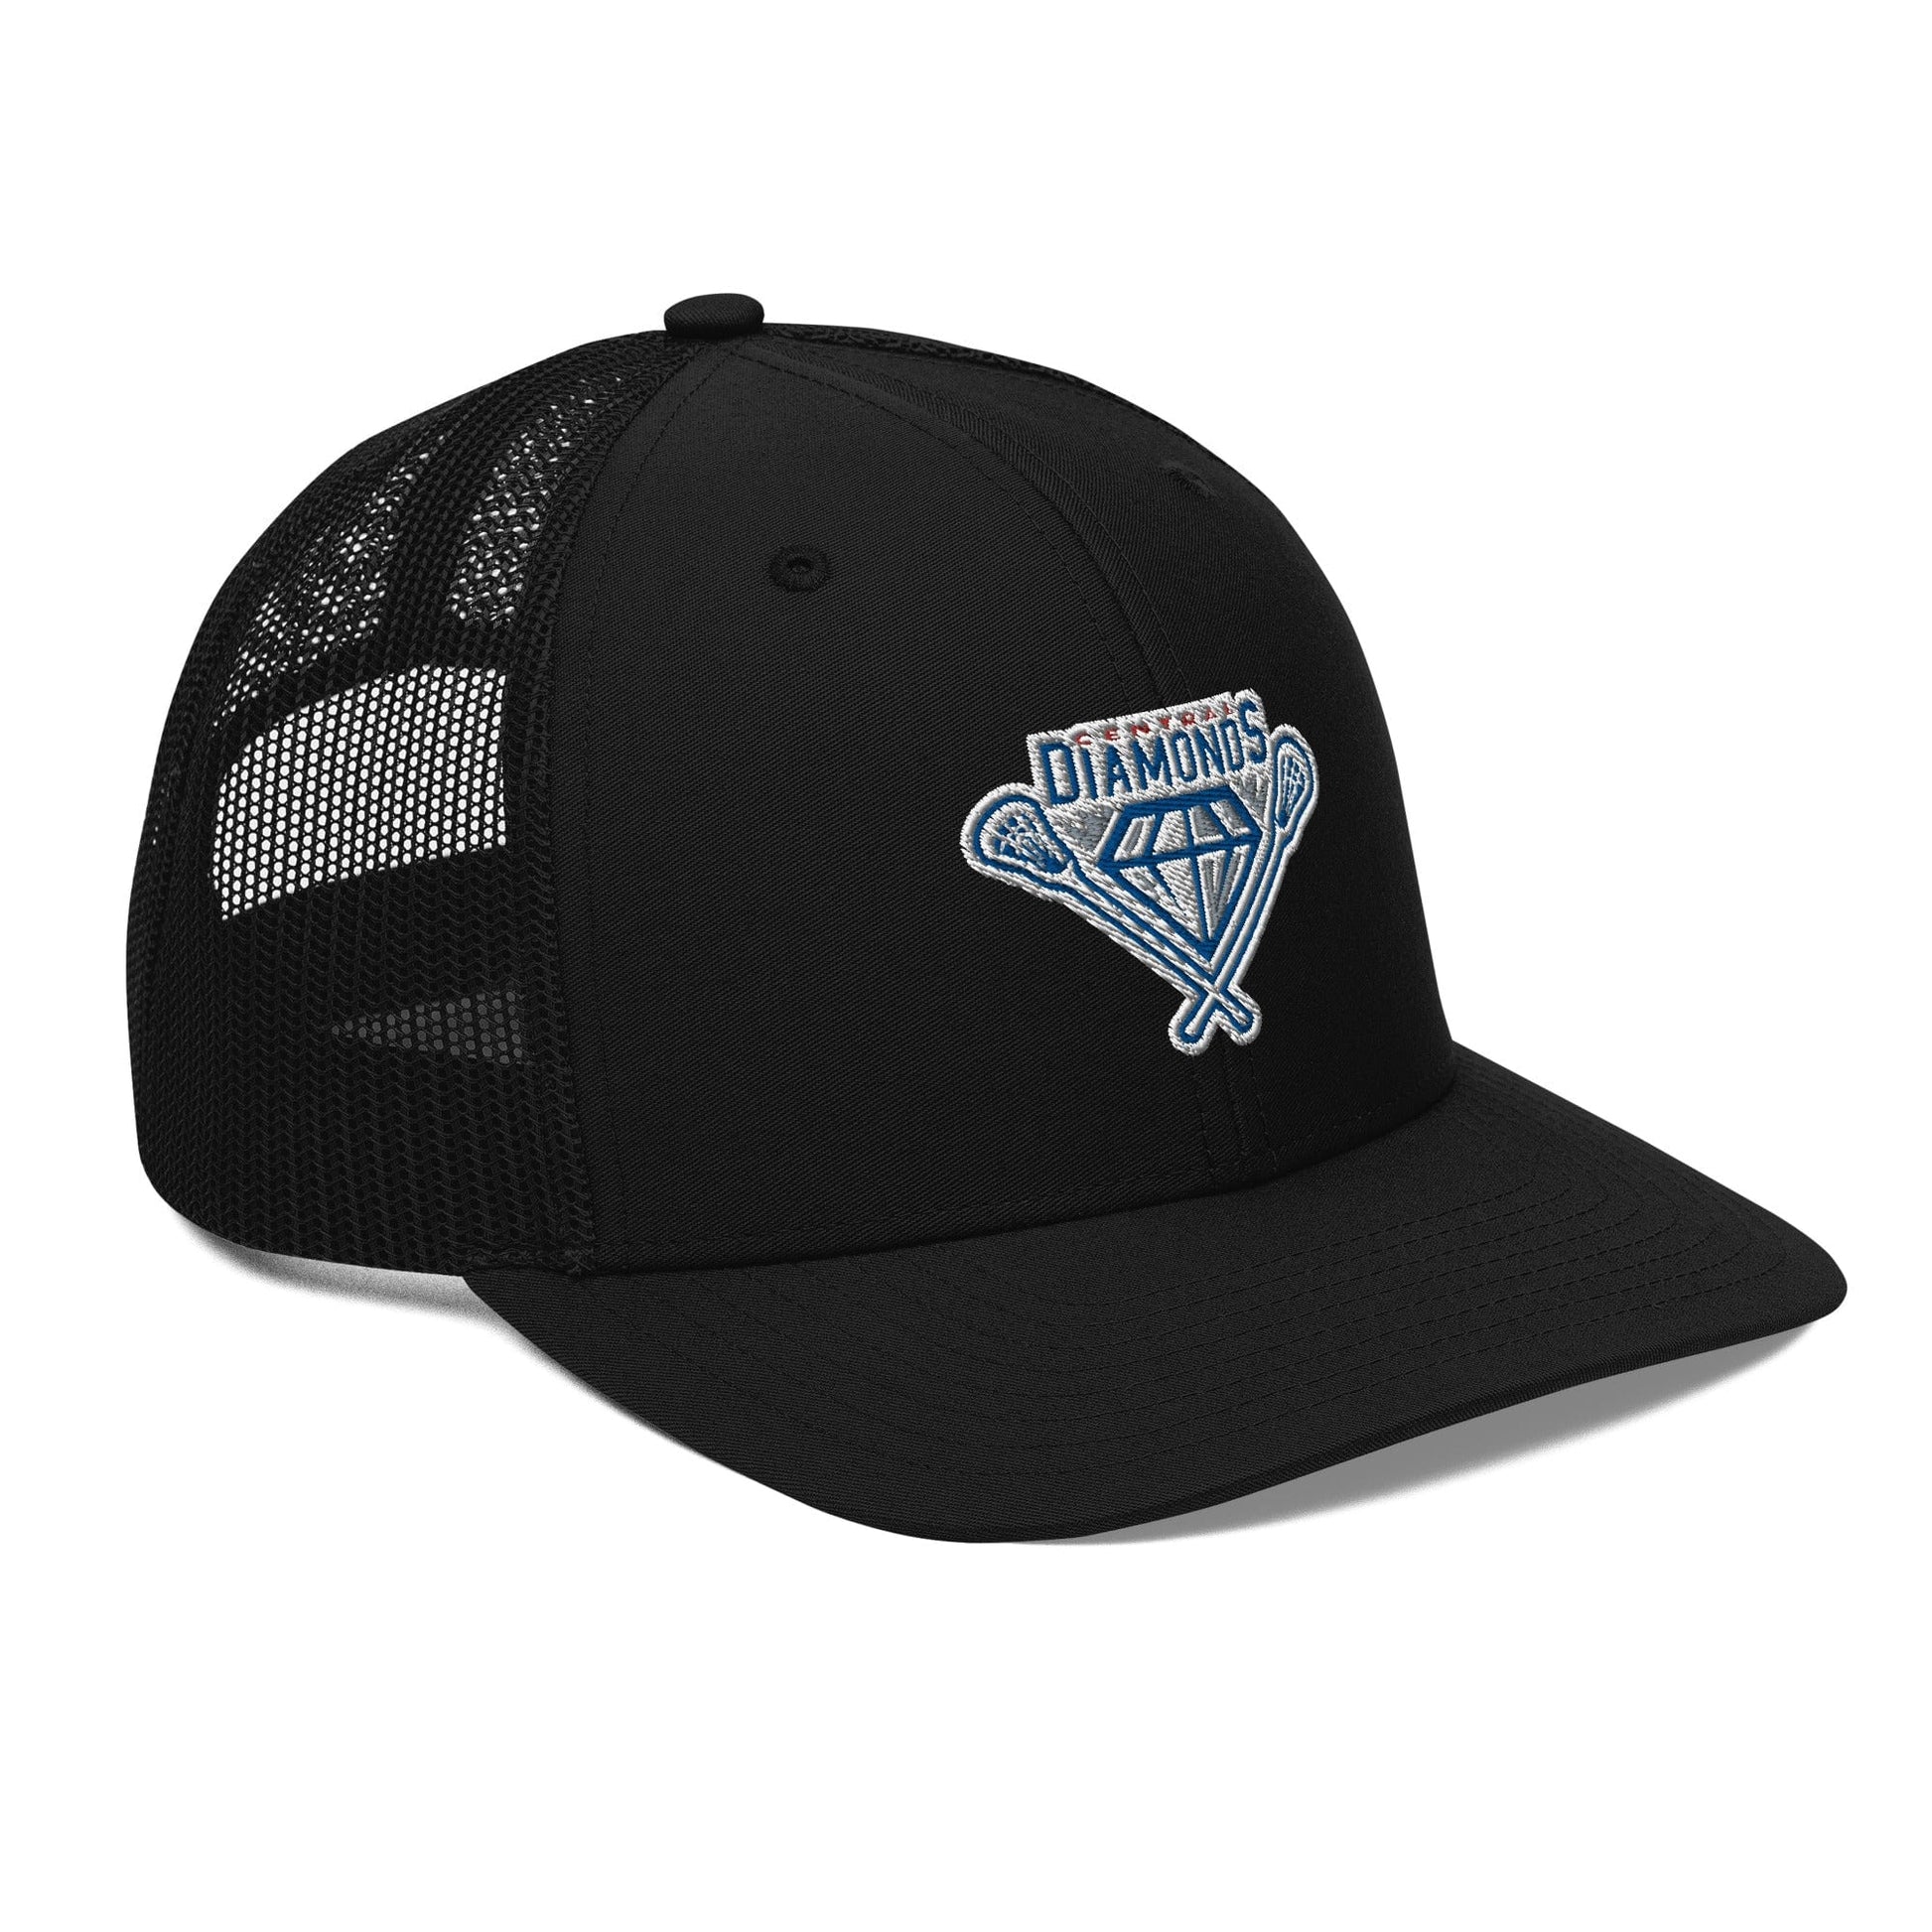 Central Diamonds Embroidered Trucker Hat Signature Lacrosse